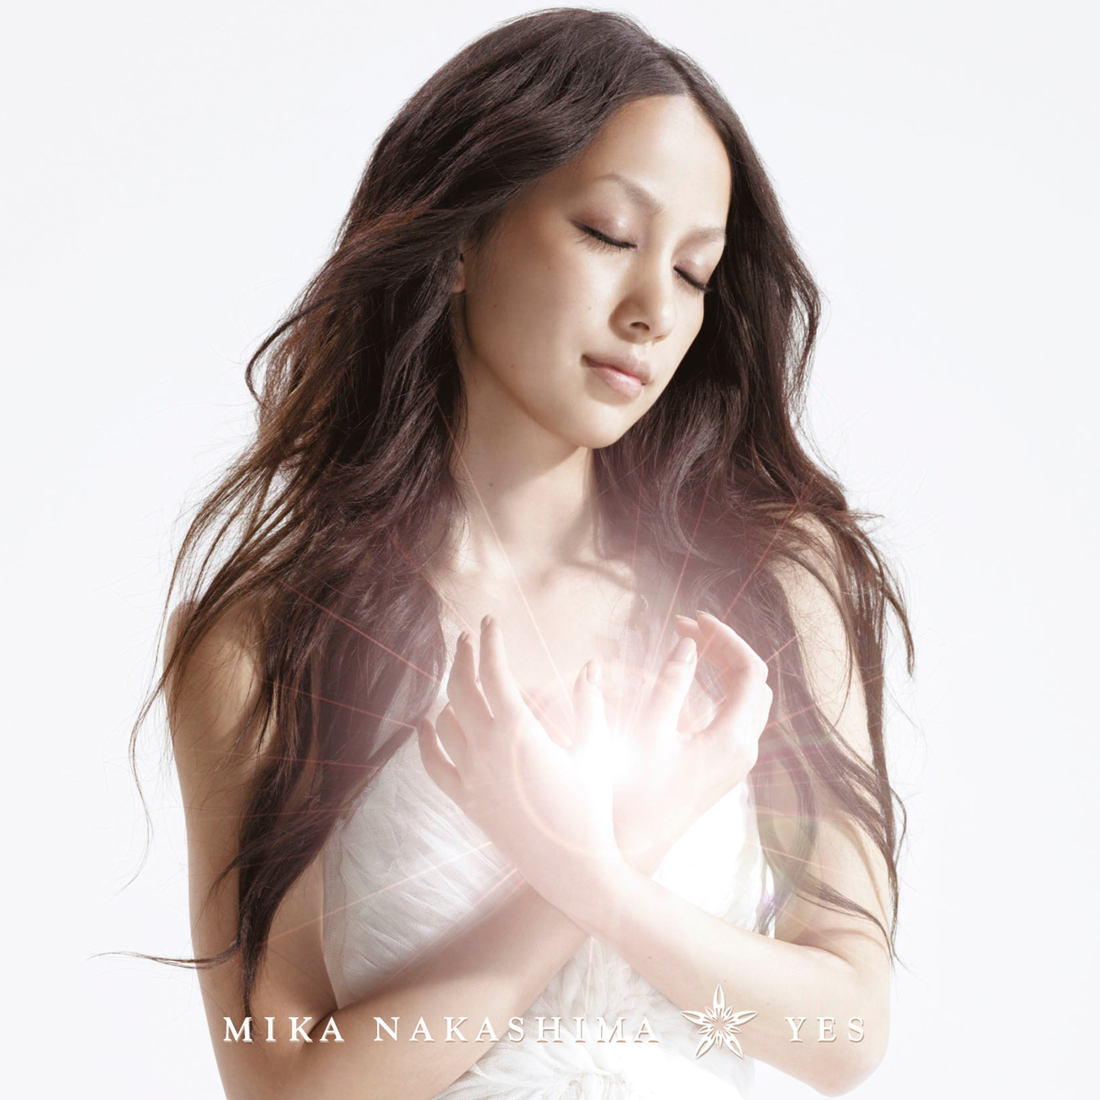 20210804.2101.2 Mika Nakashima - Yes (DVD) cover.jpg